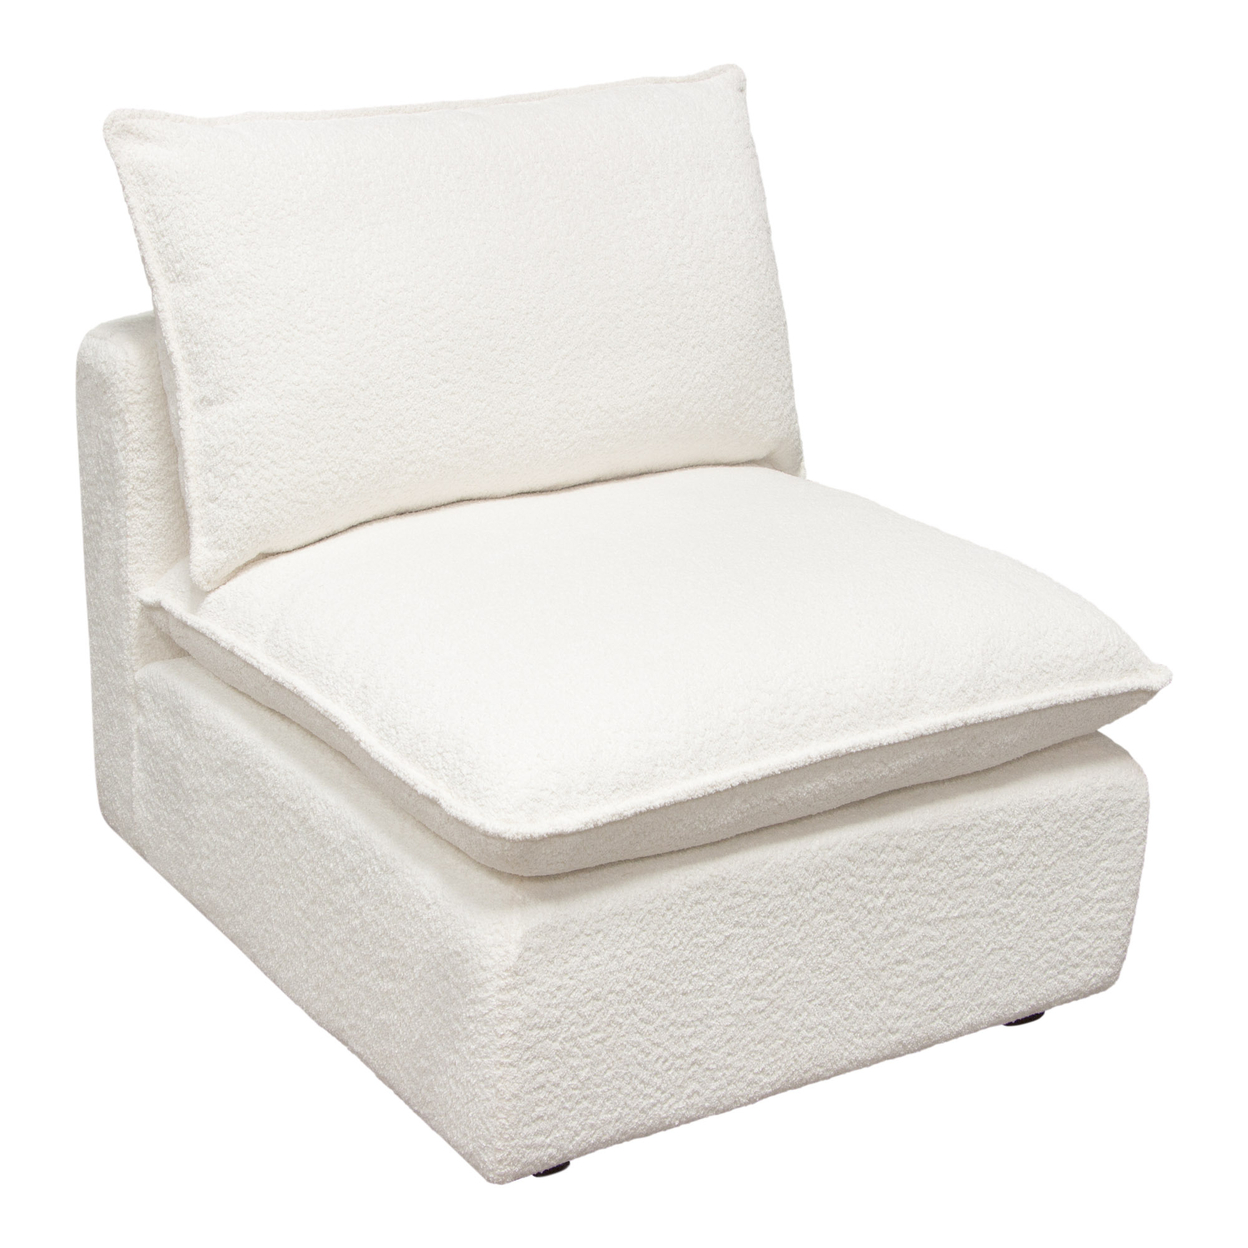 Agg 37 Inch Armless Chair, Feather Down Seat, White Faux Sheepskin- Saltoro Sherpi